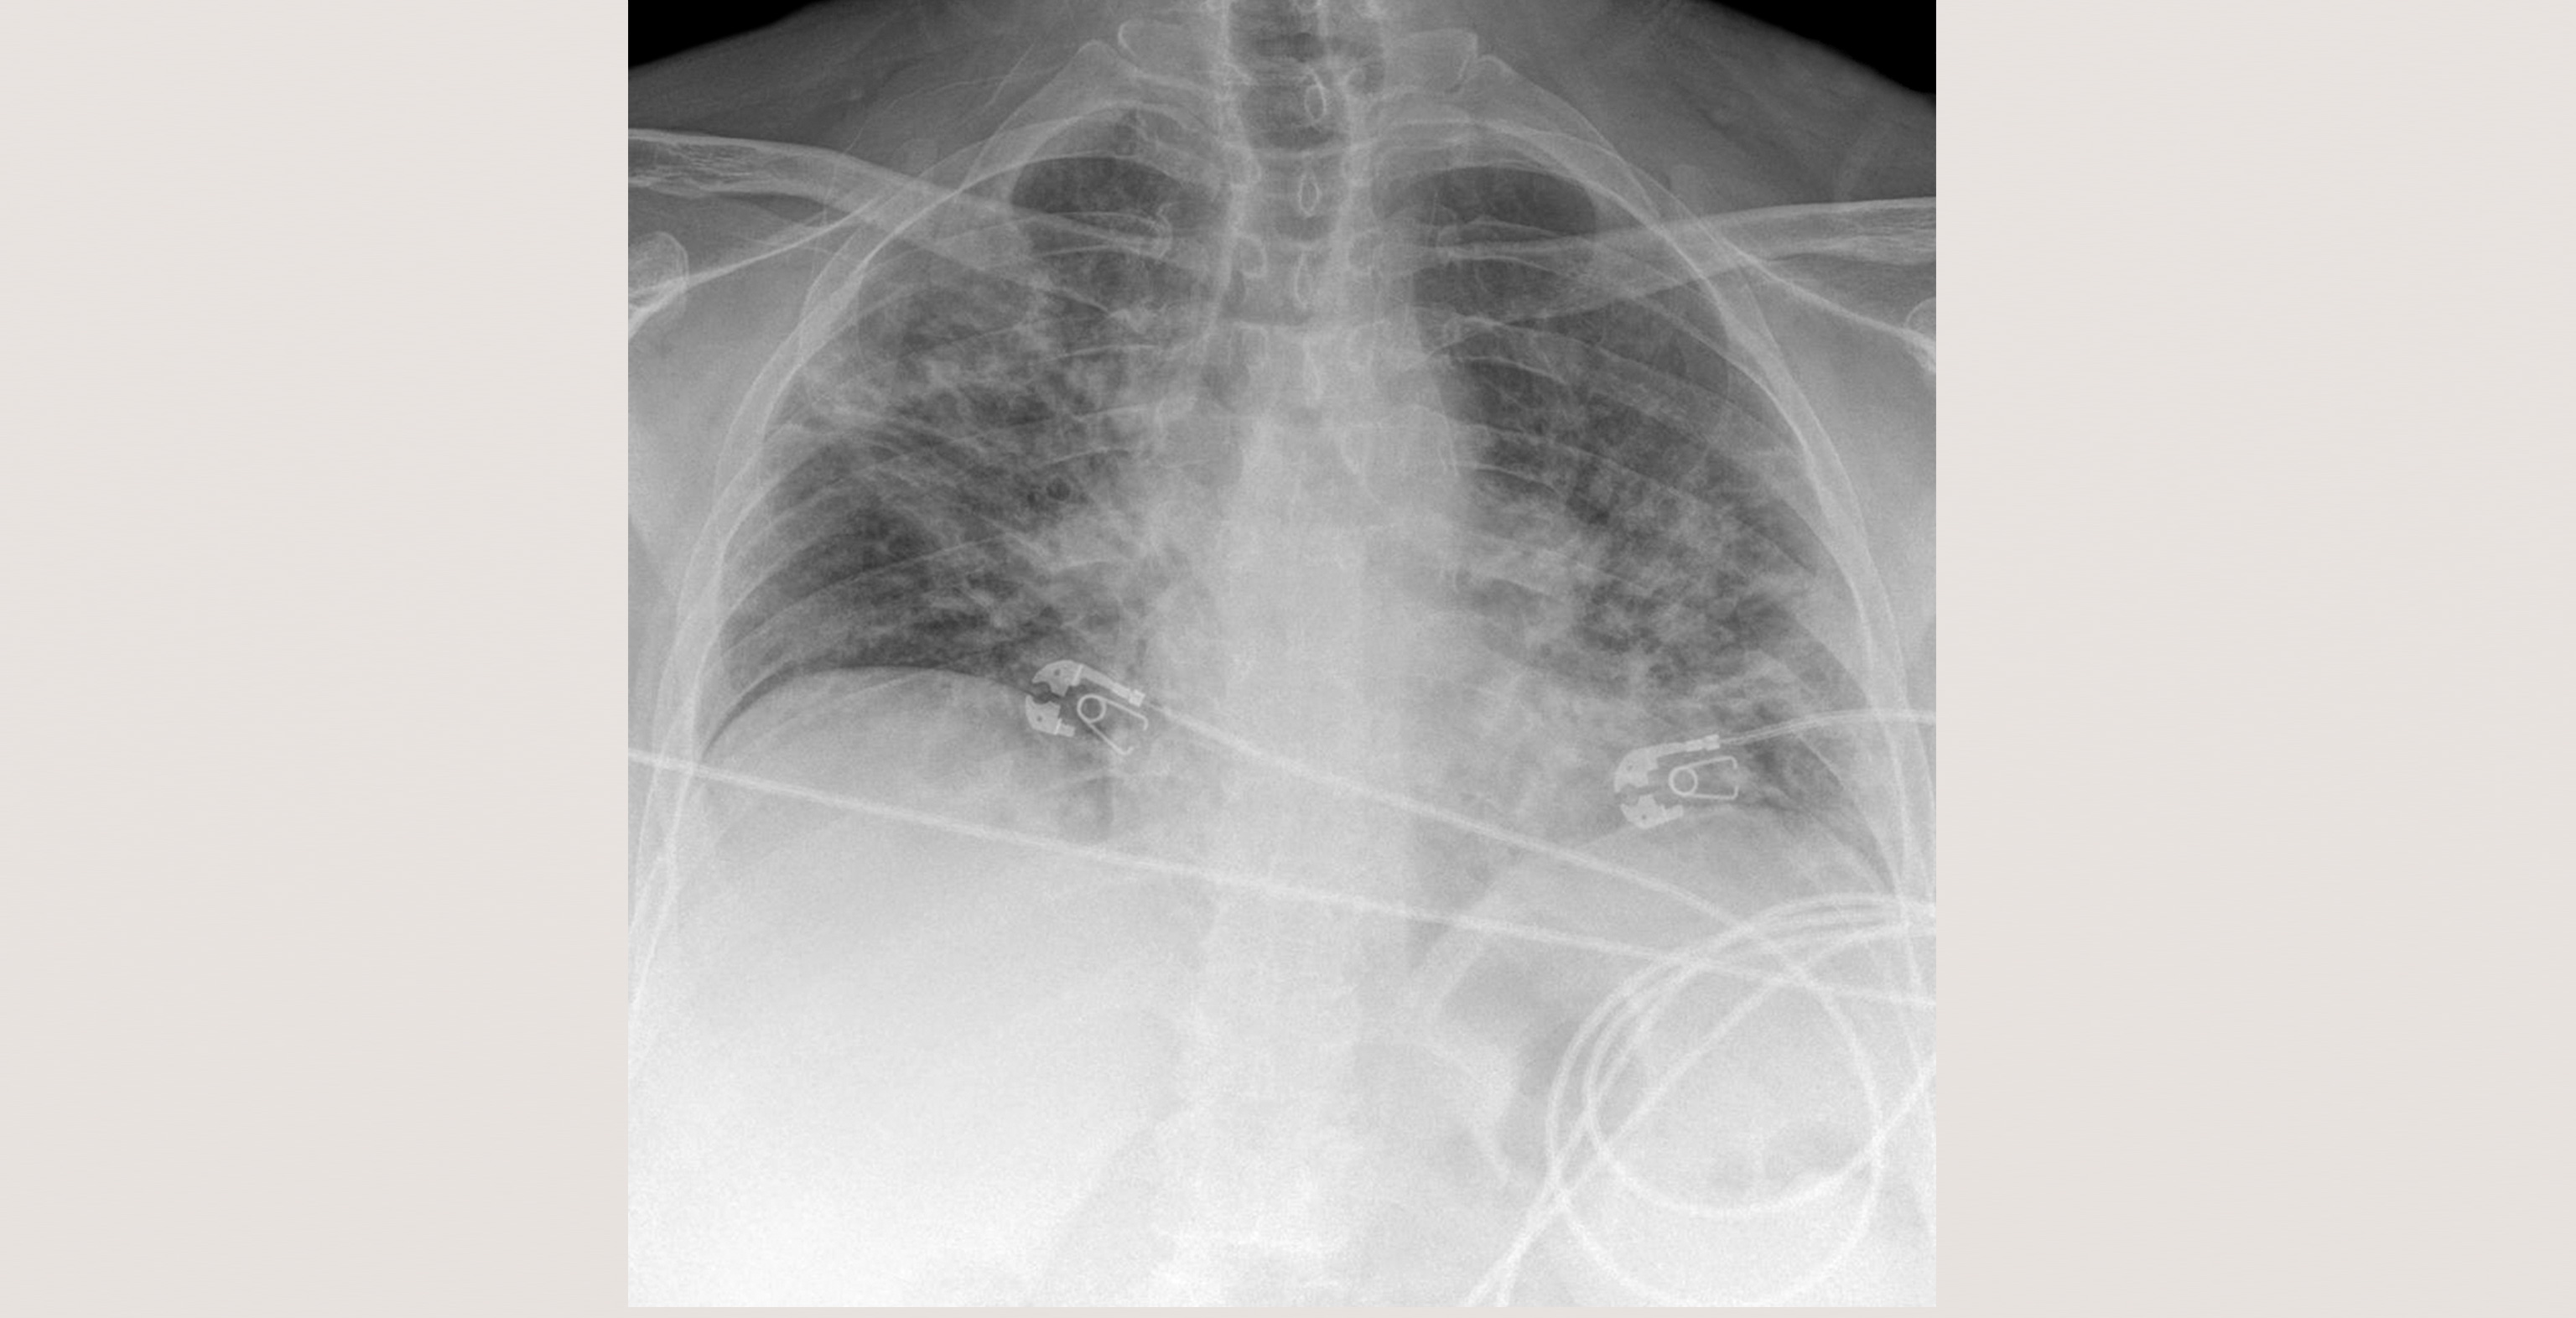 6-p4-2-radiology-chest